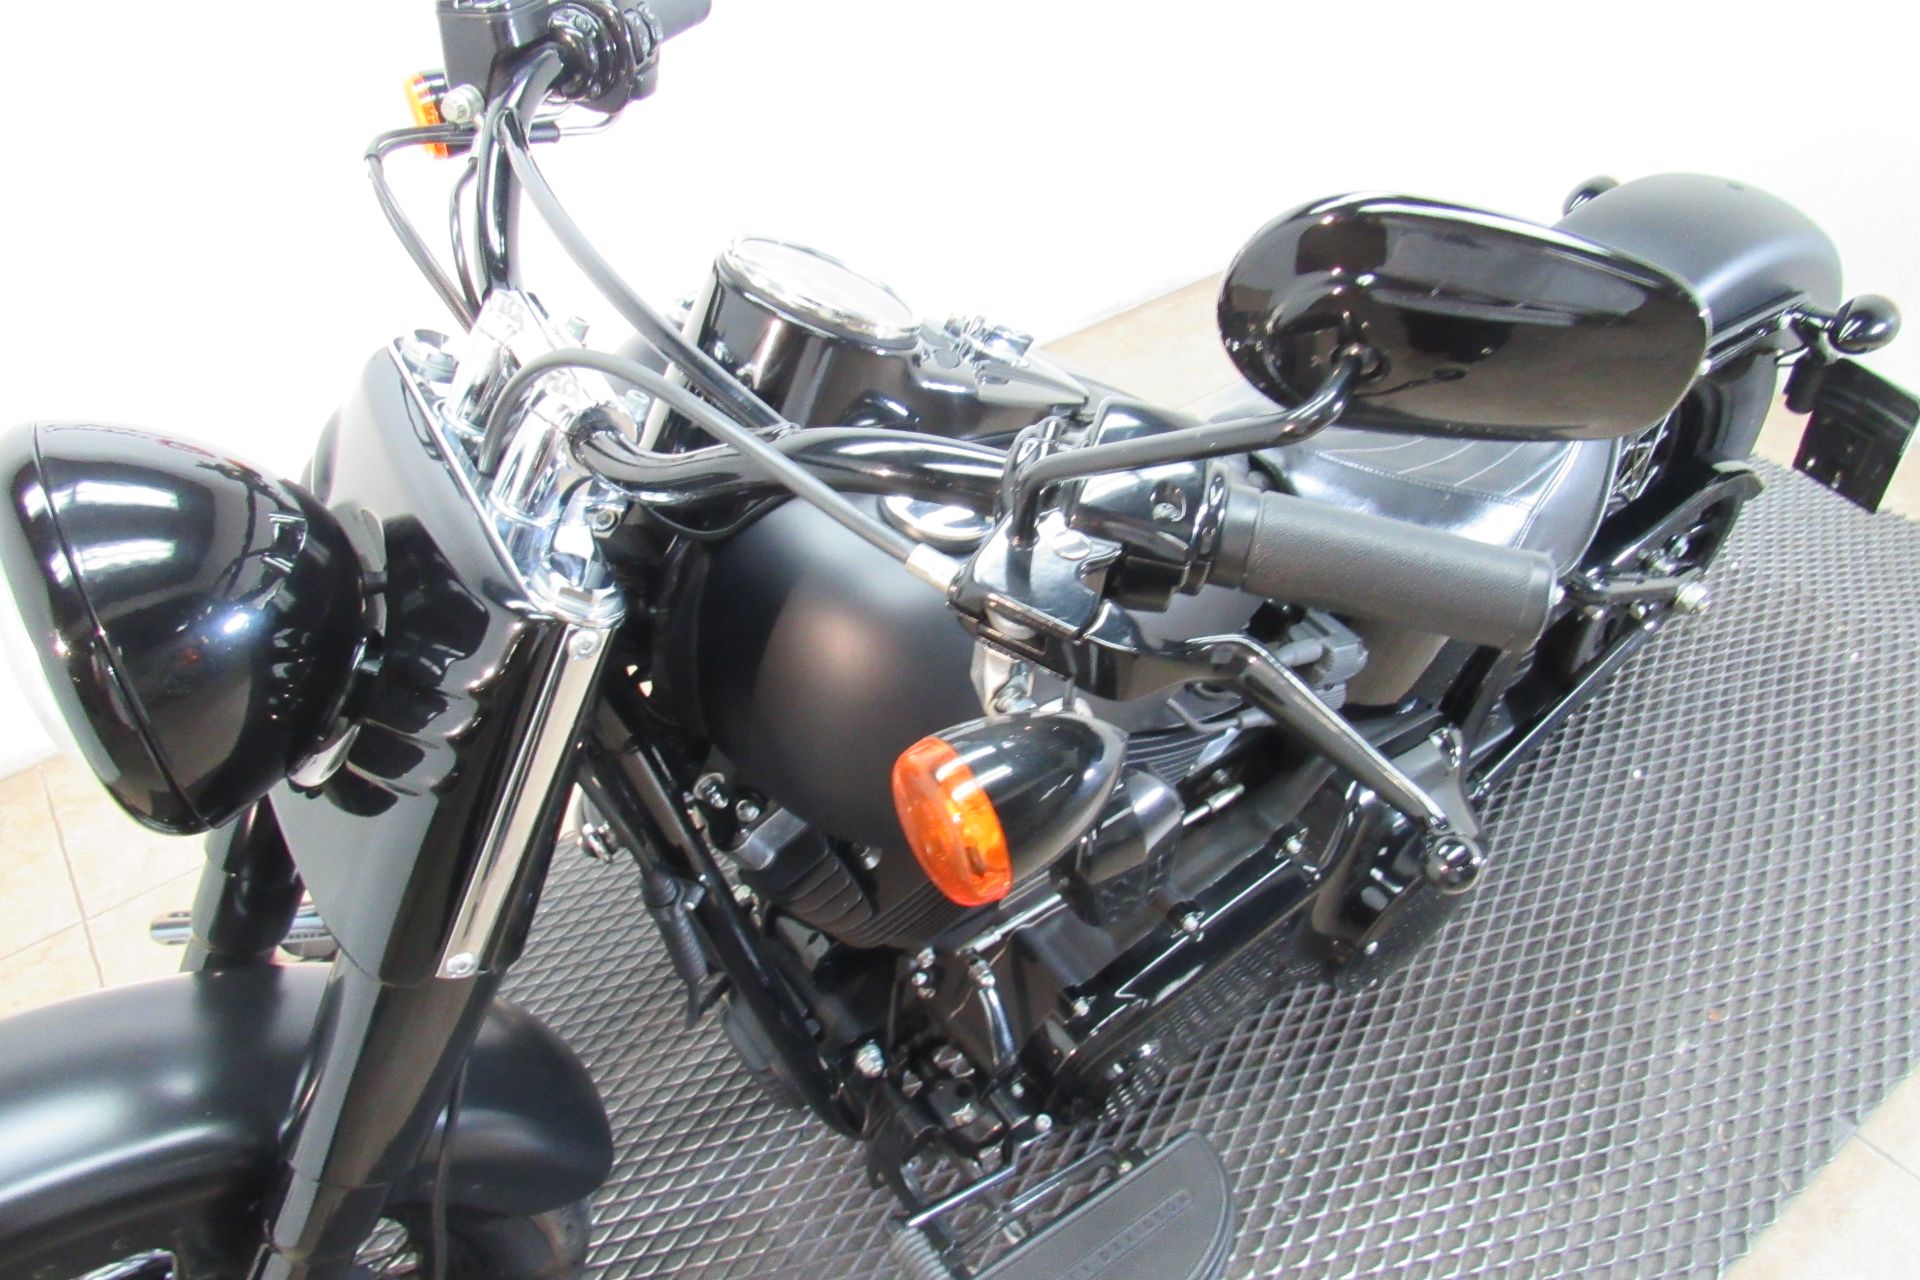 2014 Harley-Davidson Softail Slim® in Temecula, California - Photo 27